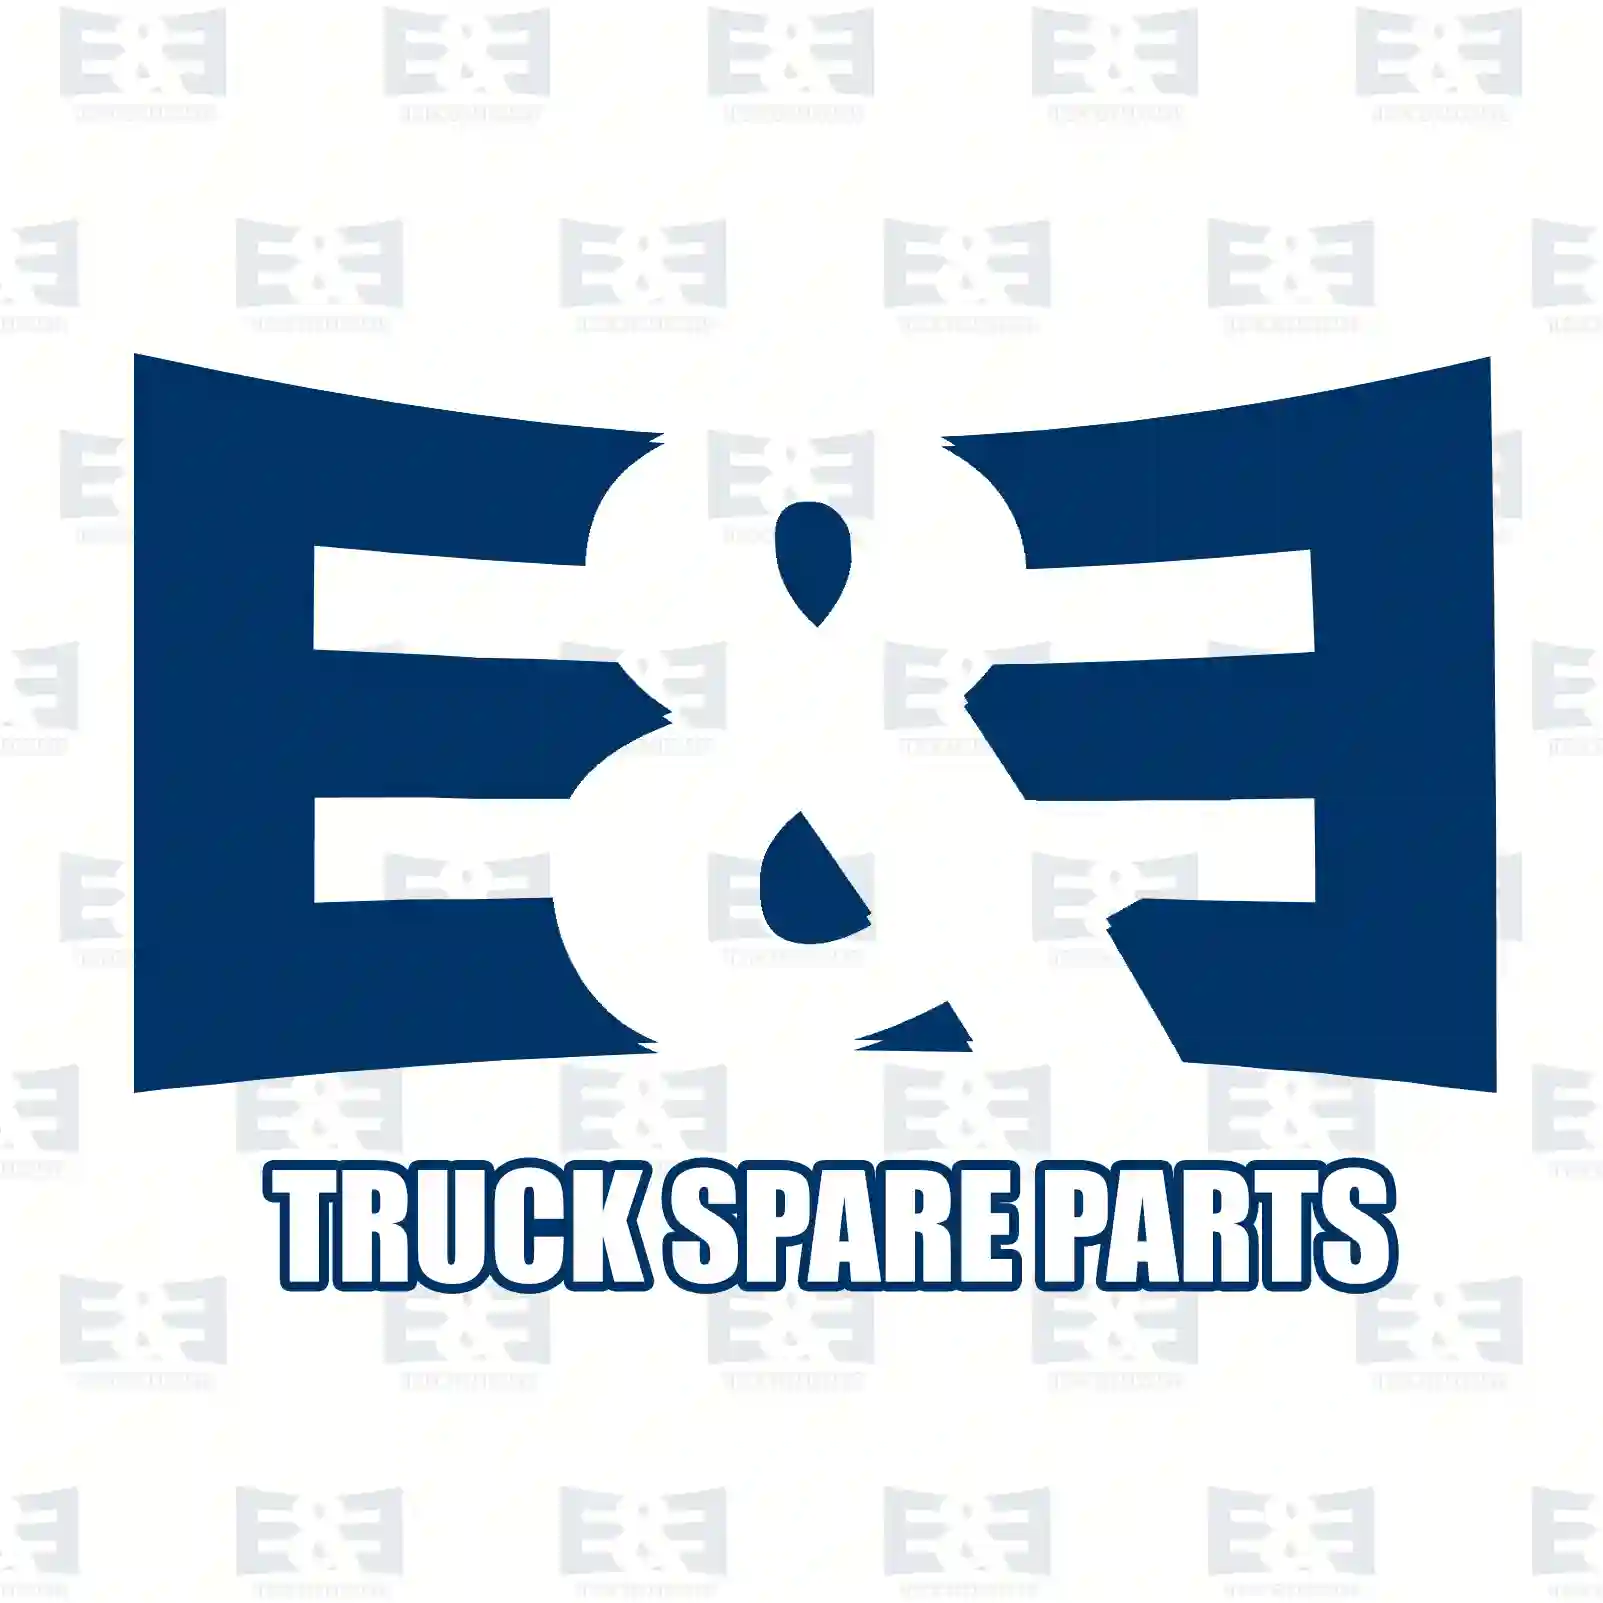 Disc brake pad kit, without wear indicator, 2E2297420, 1763916, 1829395, 1840037, 1916327, BK21-2M008-AA, BK21-2M008-AC, MEBK2J-2M008-AA ||  2E2297420 E&E Truck Spare Parts | Truck Spare Parts, Auotomotive Spare Parts Disc brake pad kit, without wear indicator, 2E2297420, 1763916, 1829395, 1840037, 1916327, BK21-2M008-AA, BK21-2M008-AC, MEBK2J-2M008-AA ||  2E2297420 E&E Truck Spare Parts | Truck Spare Parts, Auotomotive Spare Parts